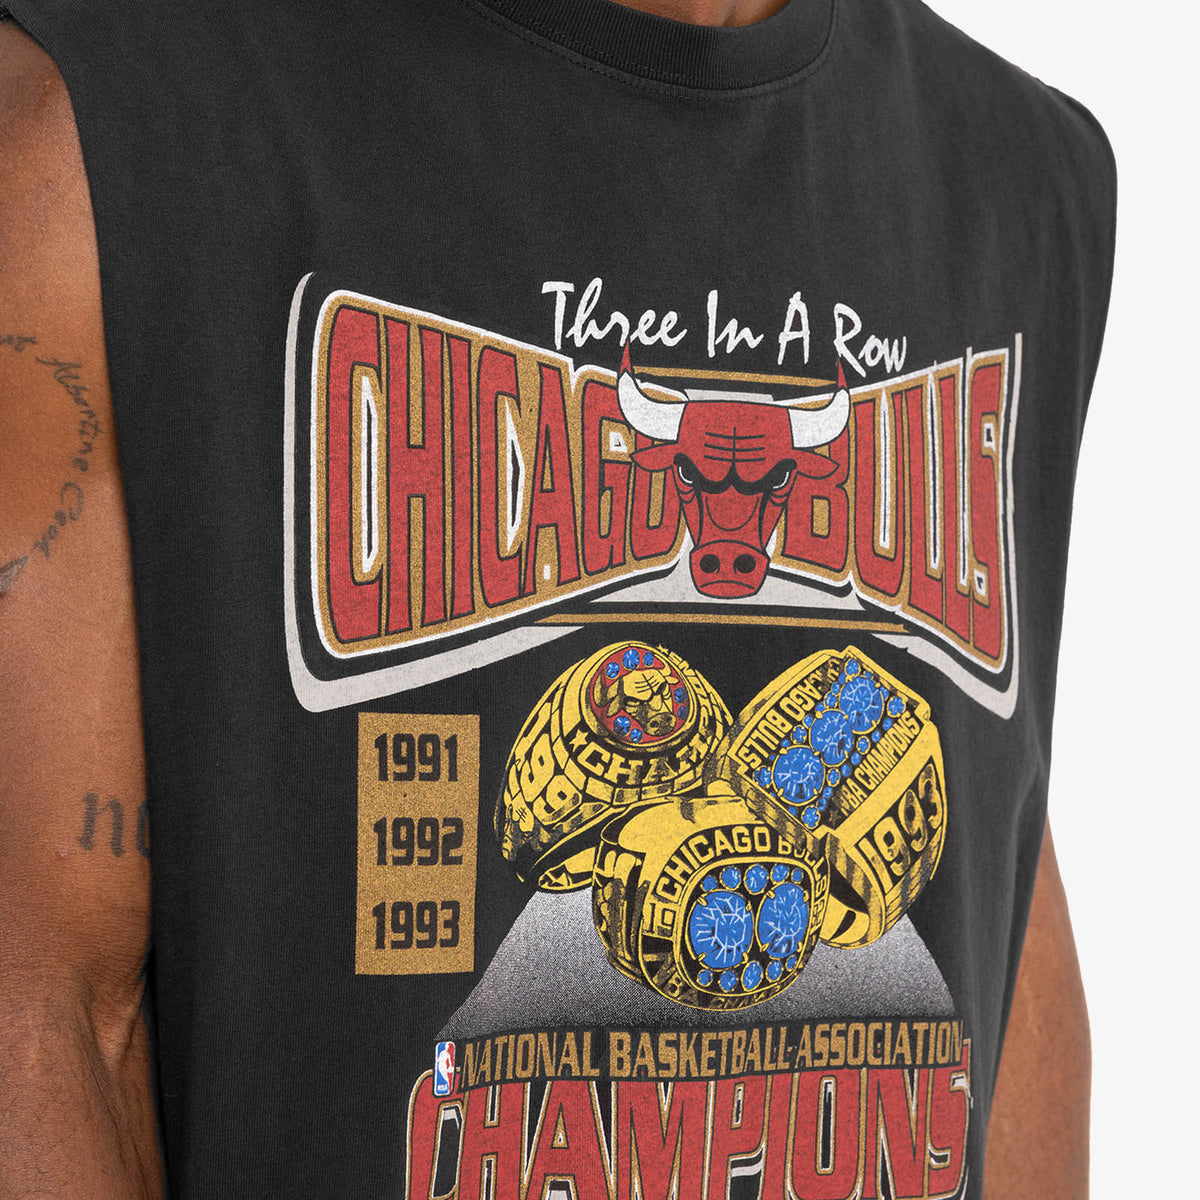 M) Vintage Chicago Bulls 6 Championship Ring T Shirt